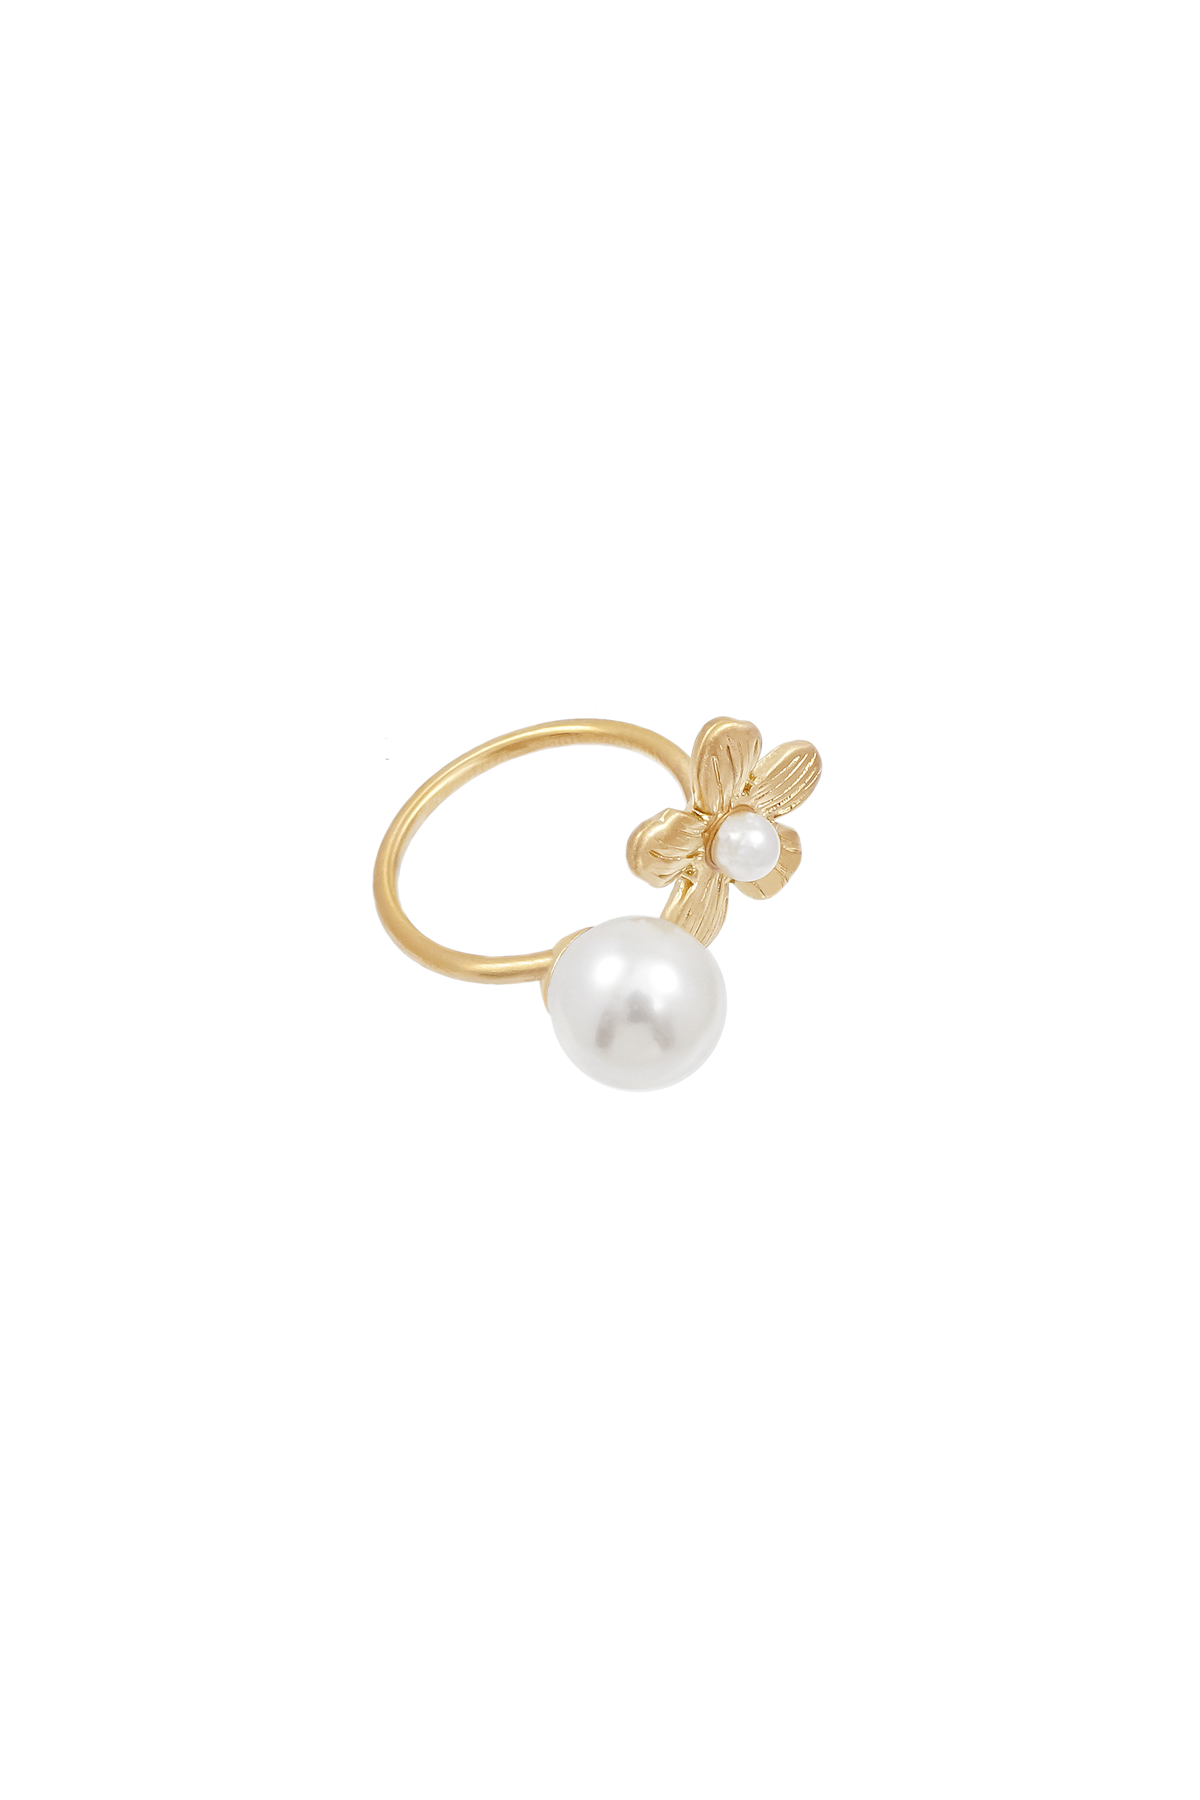 Flower pearl ring - Adjustable